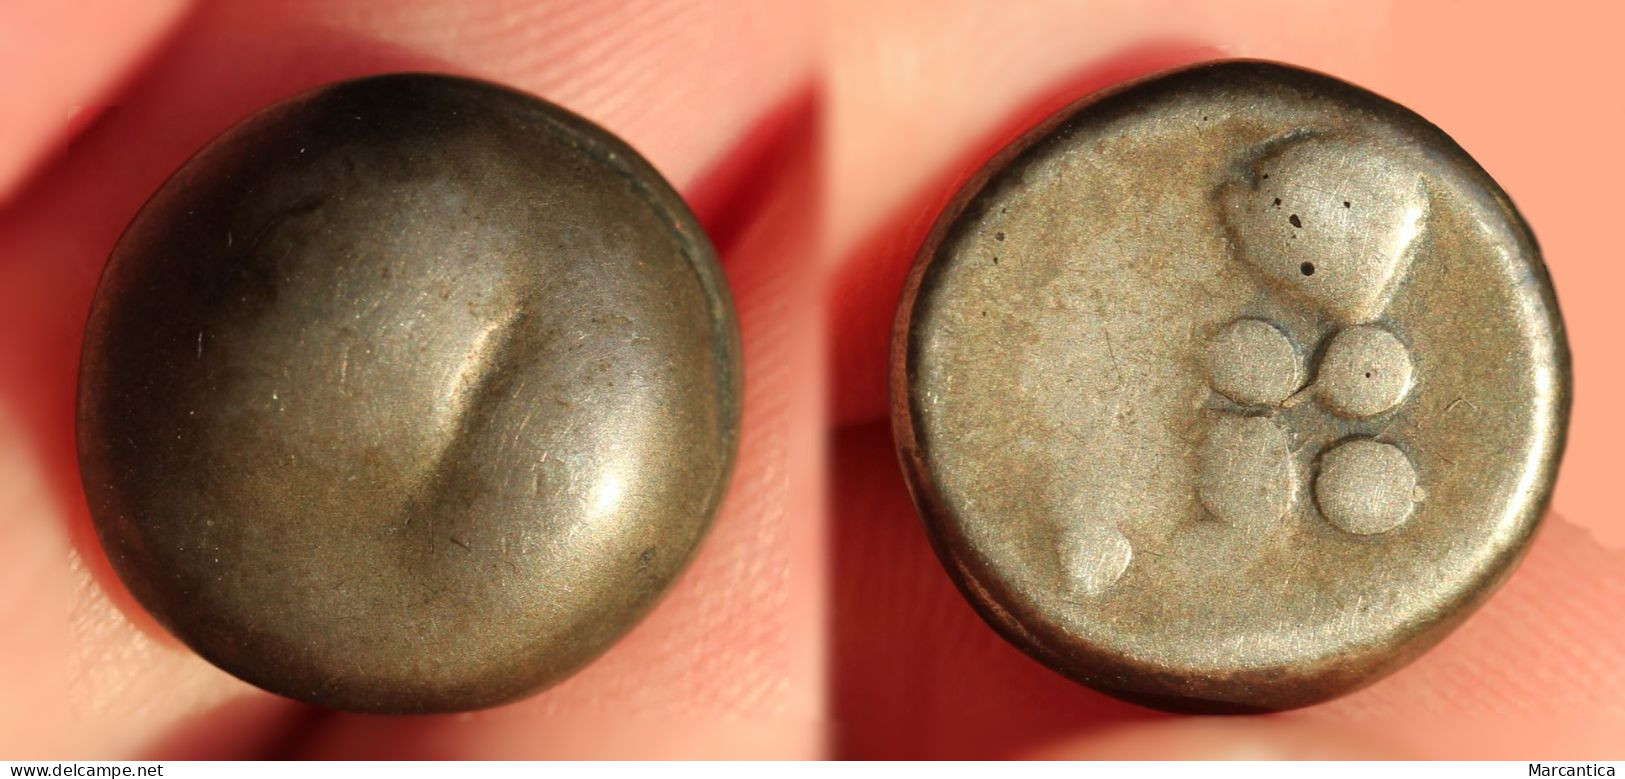 CELTIC , Danube ,Cotini - Type De Buckelavers- Danubian Celts ,silver Tetradrachm,19mm, 3rd-2nd Century BC - Celtic